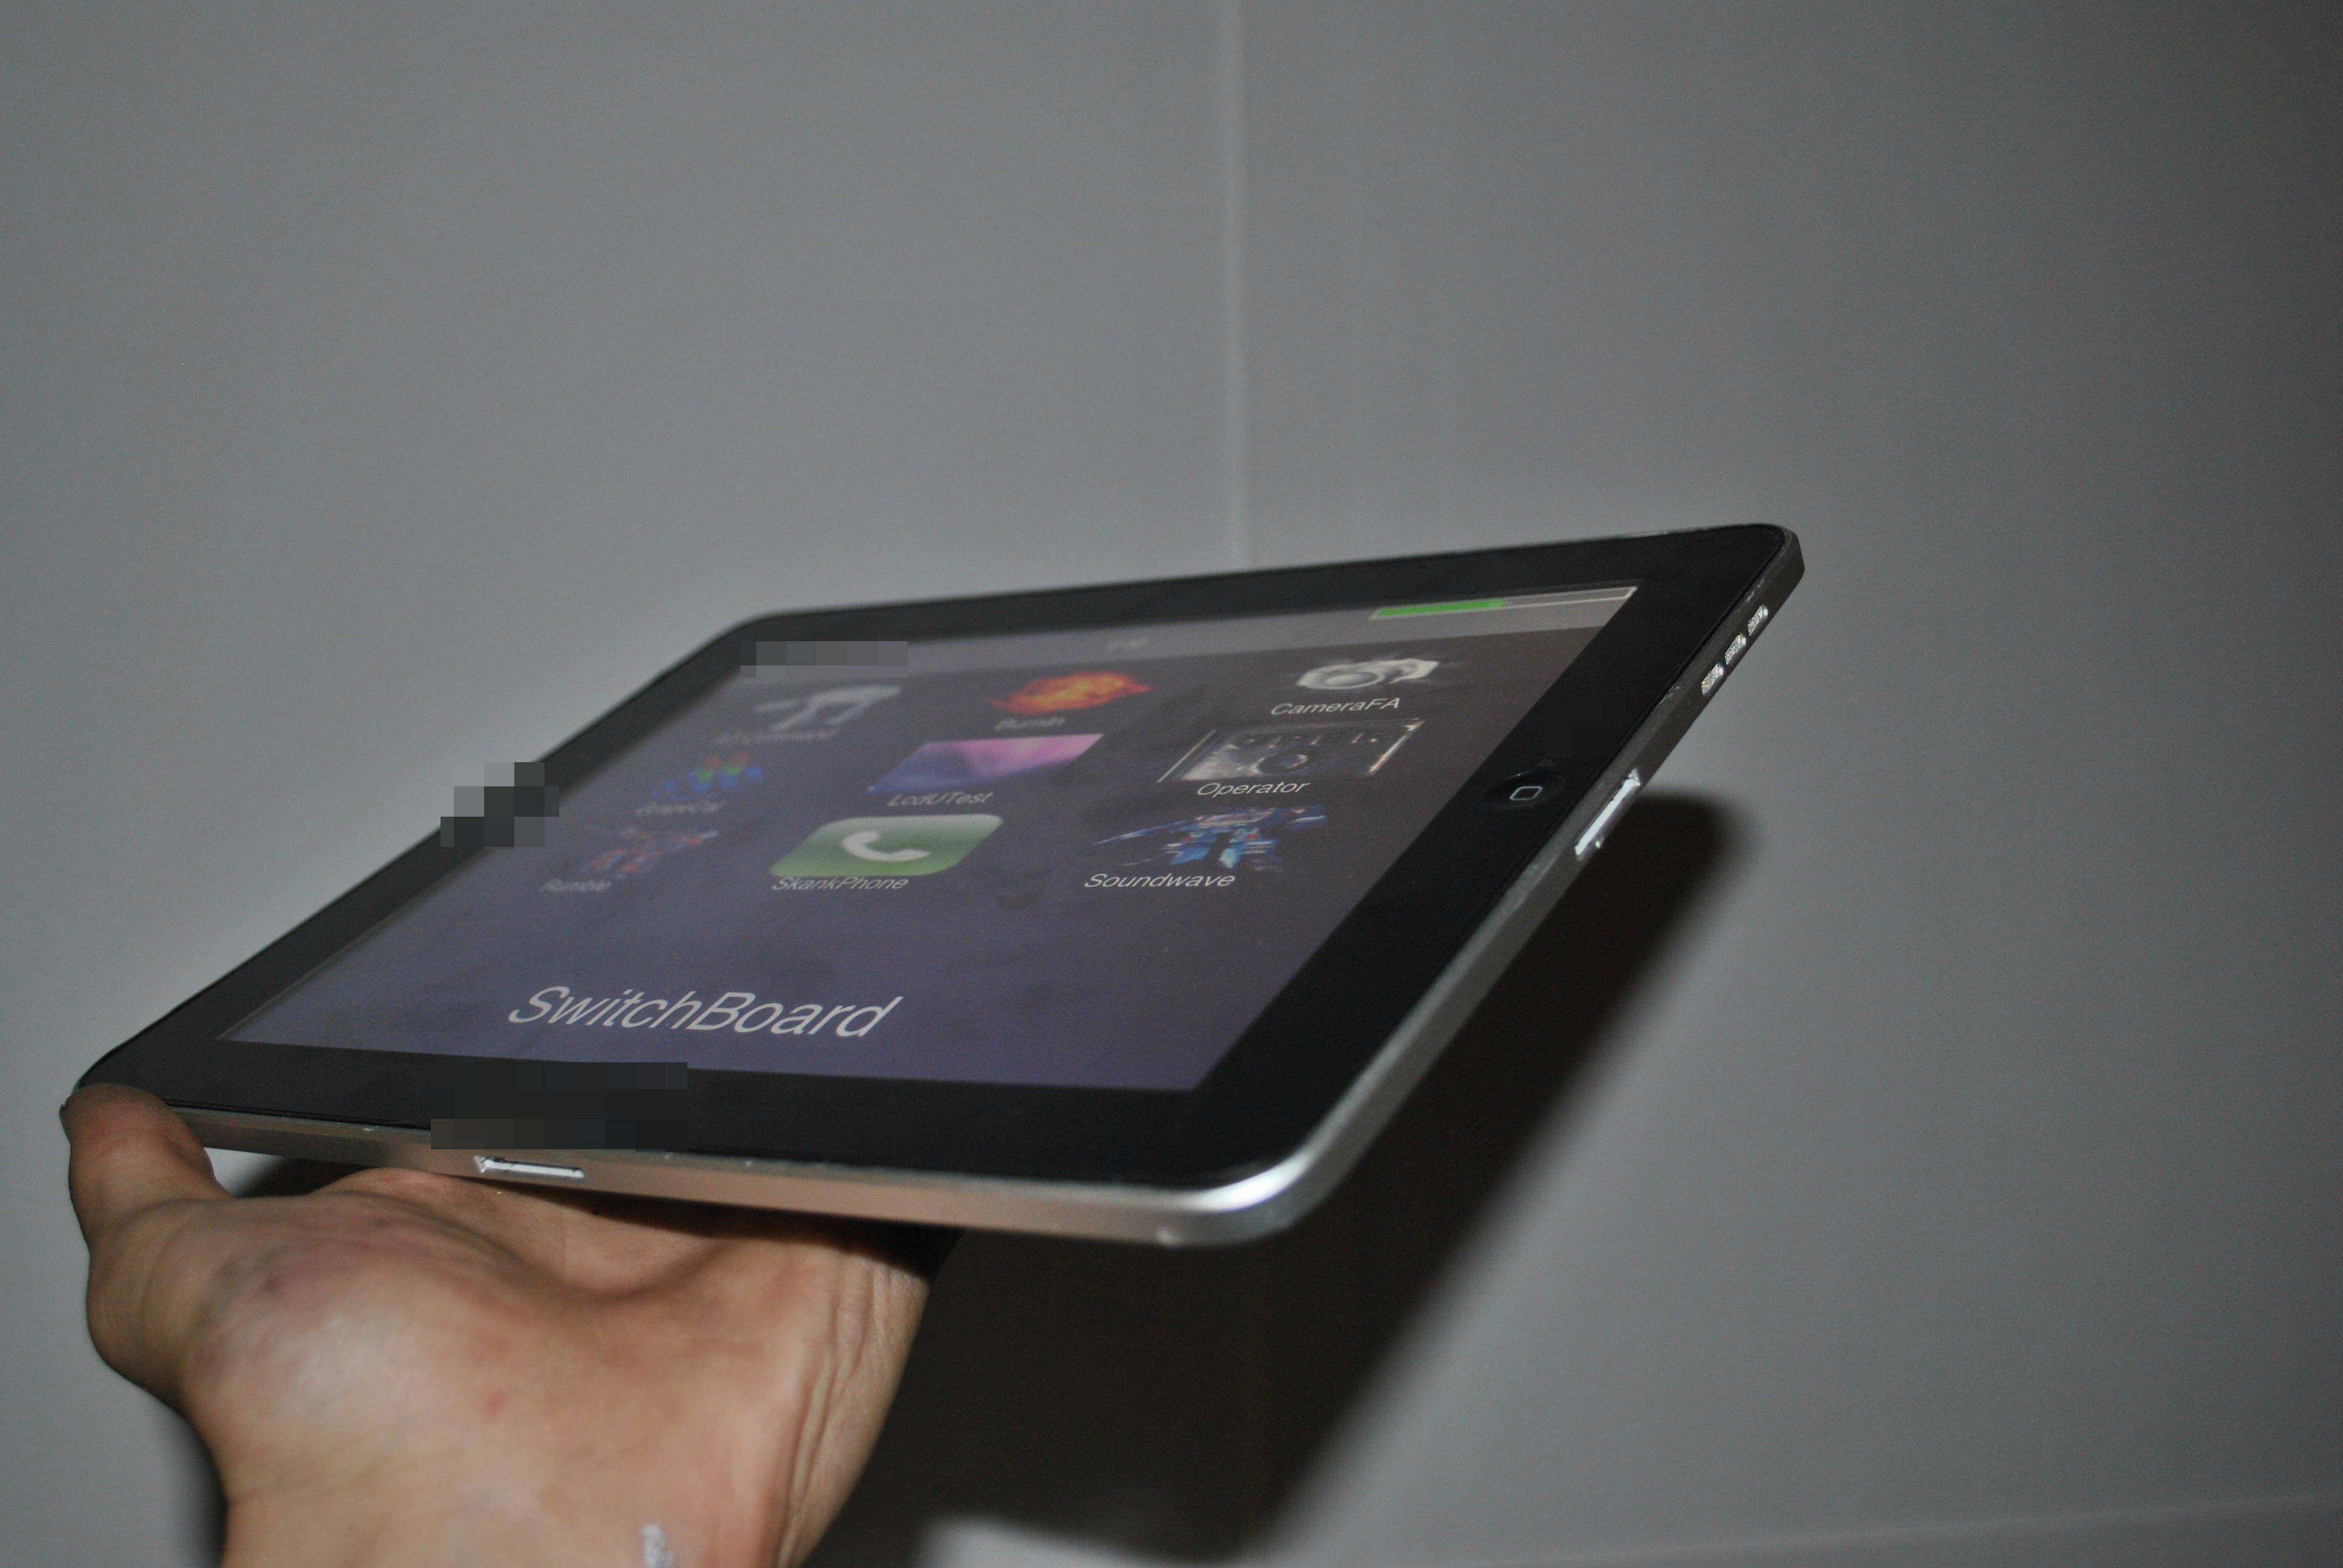 Prototipo iPad 2 dock su eBay